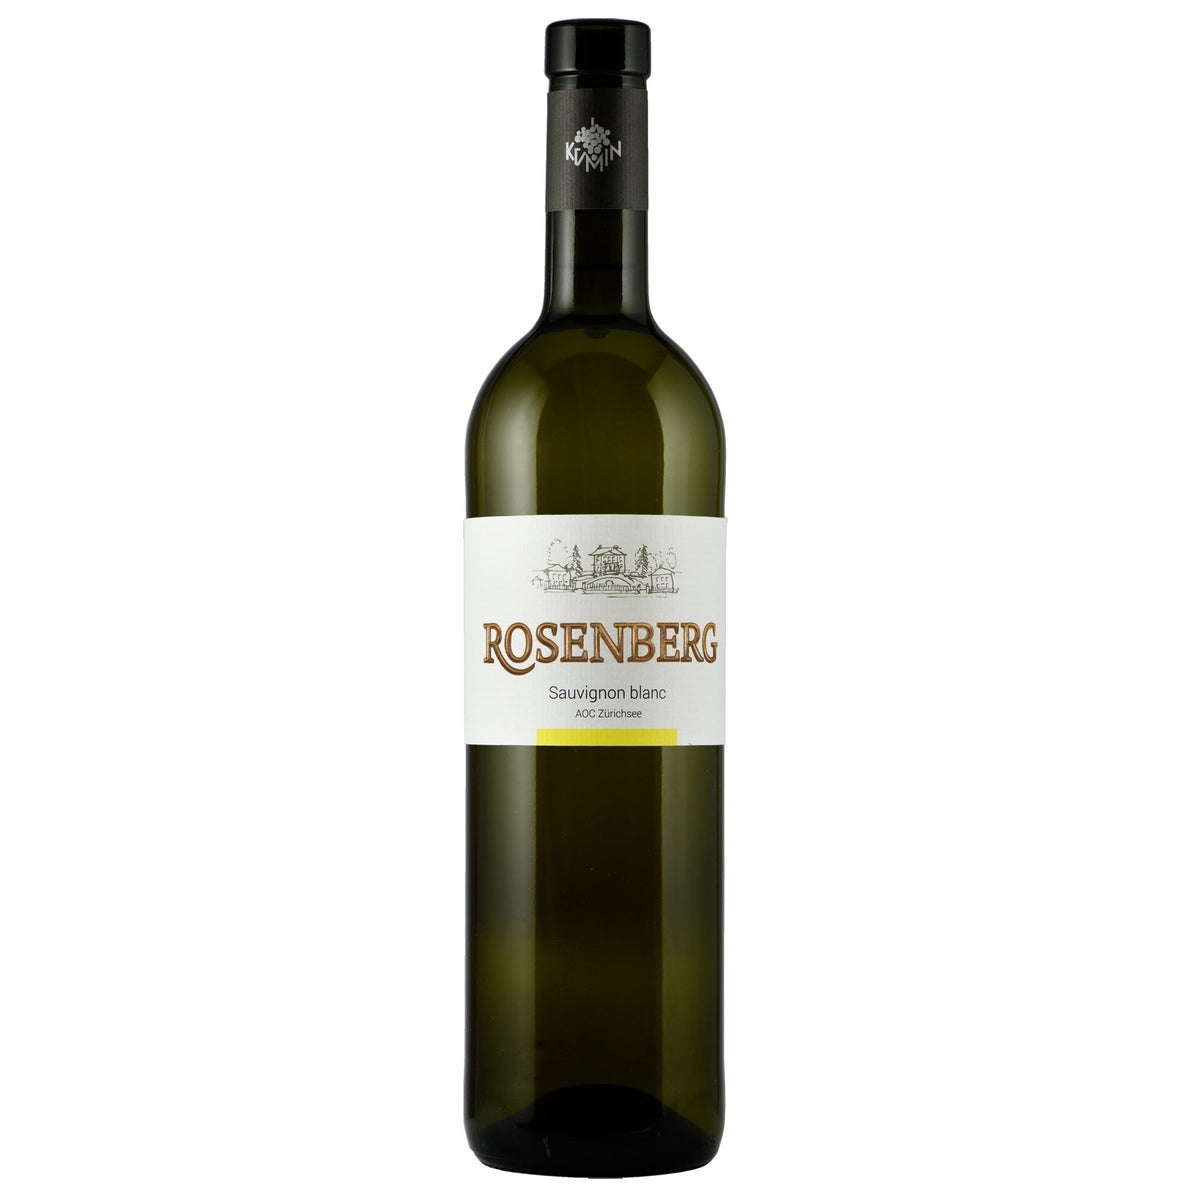 2022 Rosenberg Sauvignon Blanc fineselect - Alkohol - Kümin 